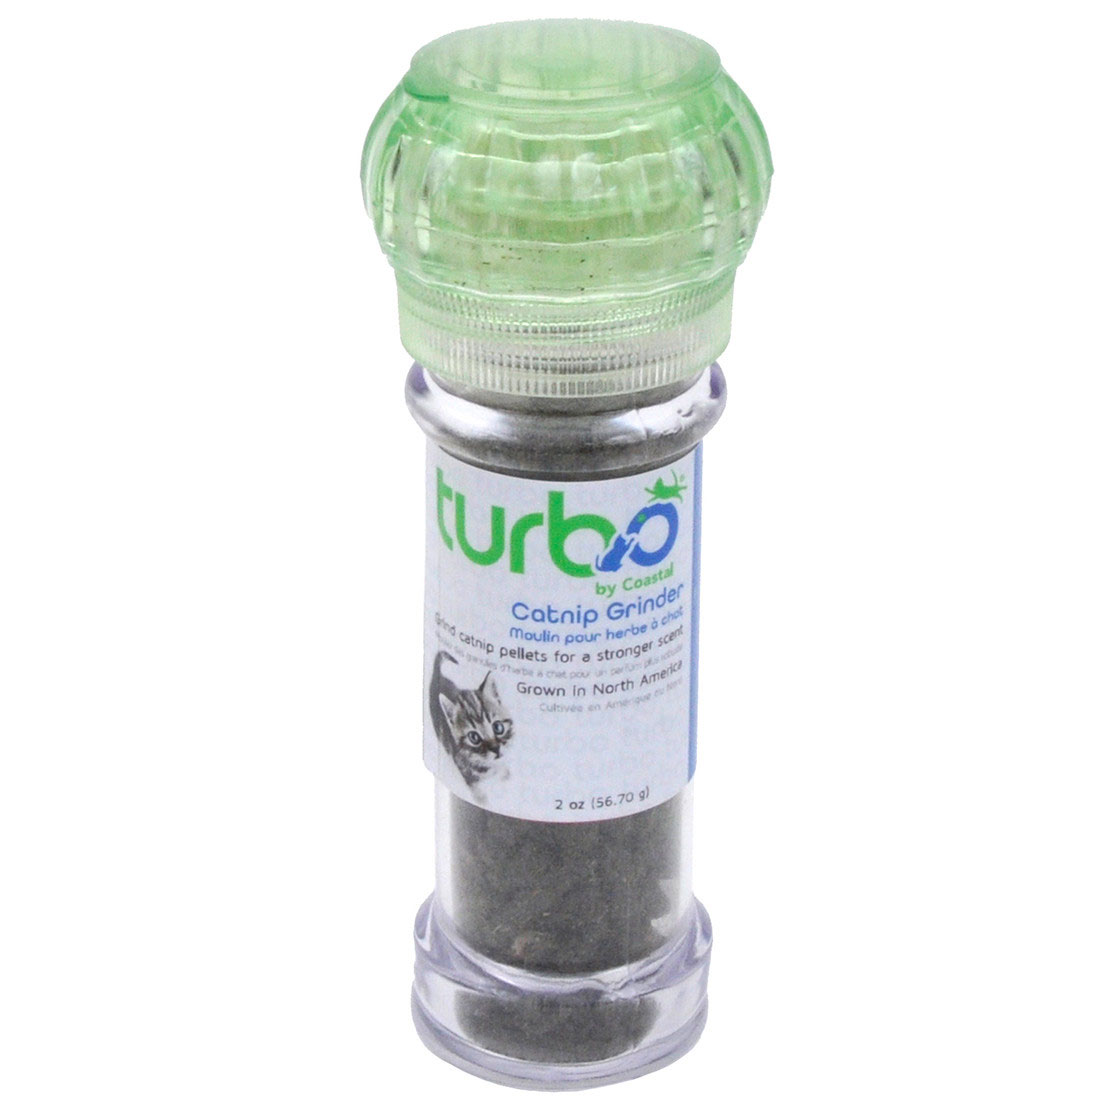 Turbo® Catnip Grinder